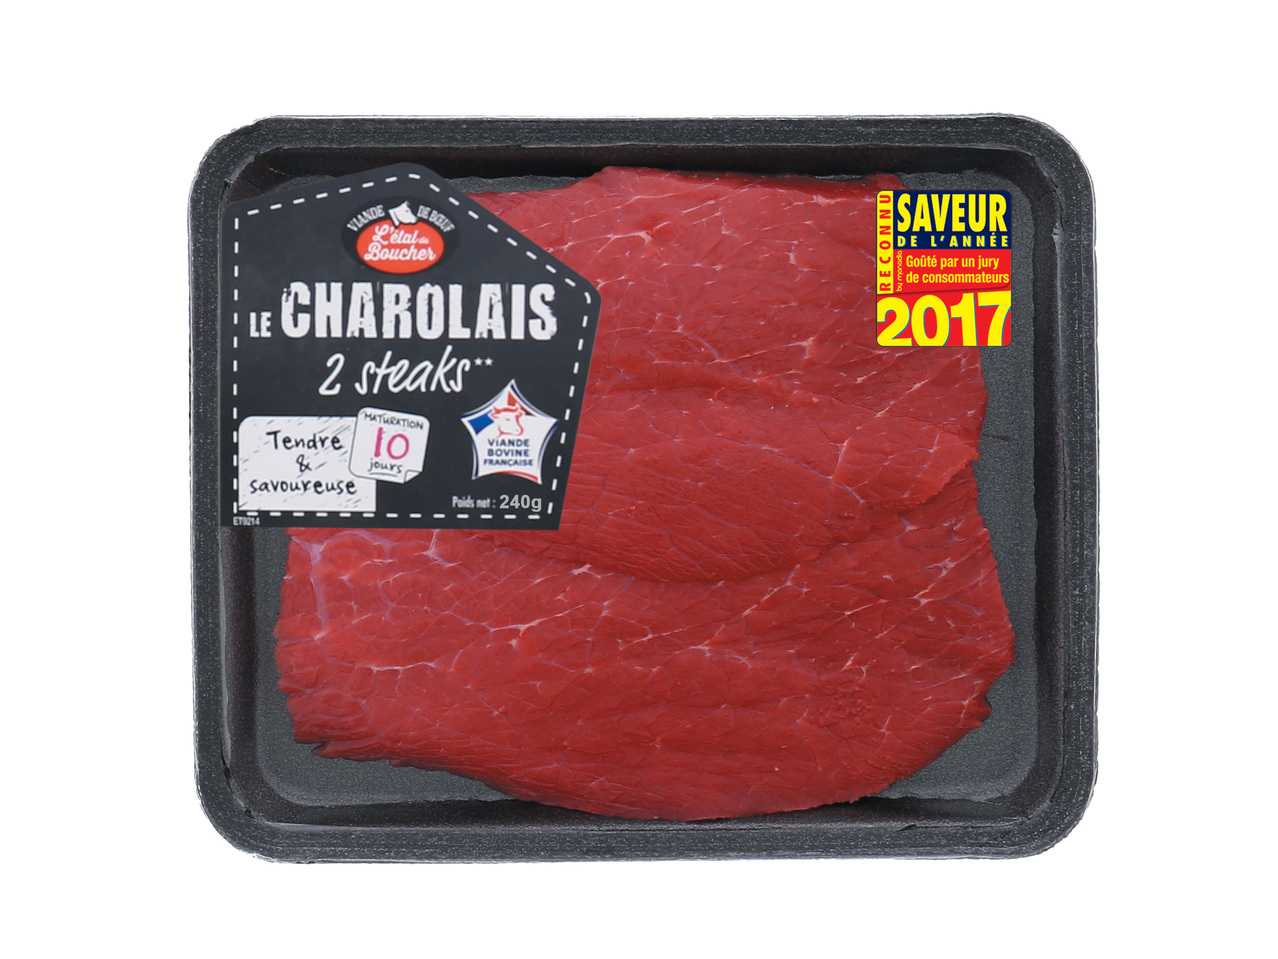 2 steaks charolais1